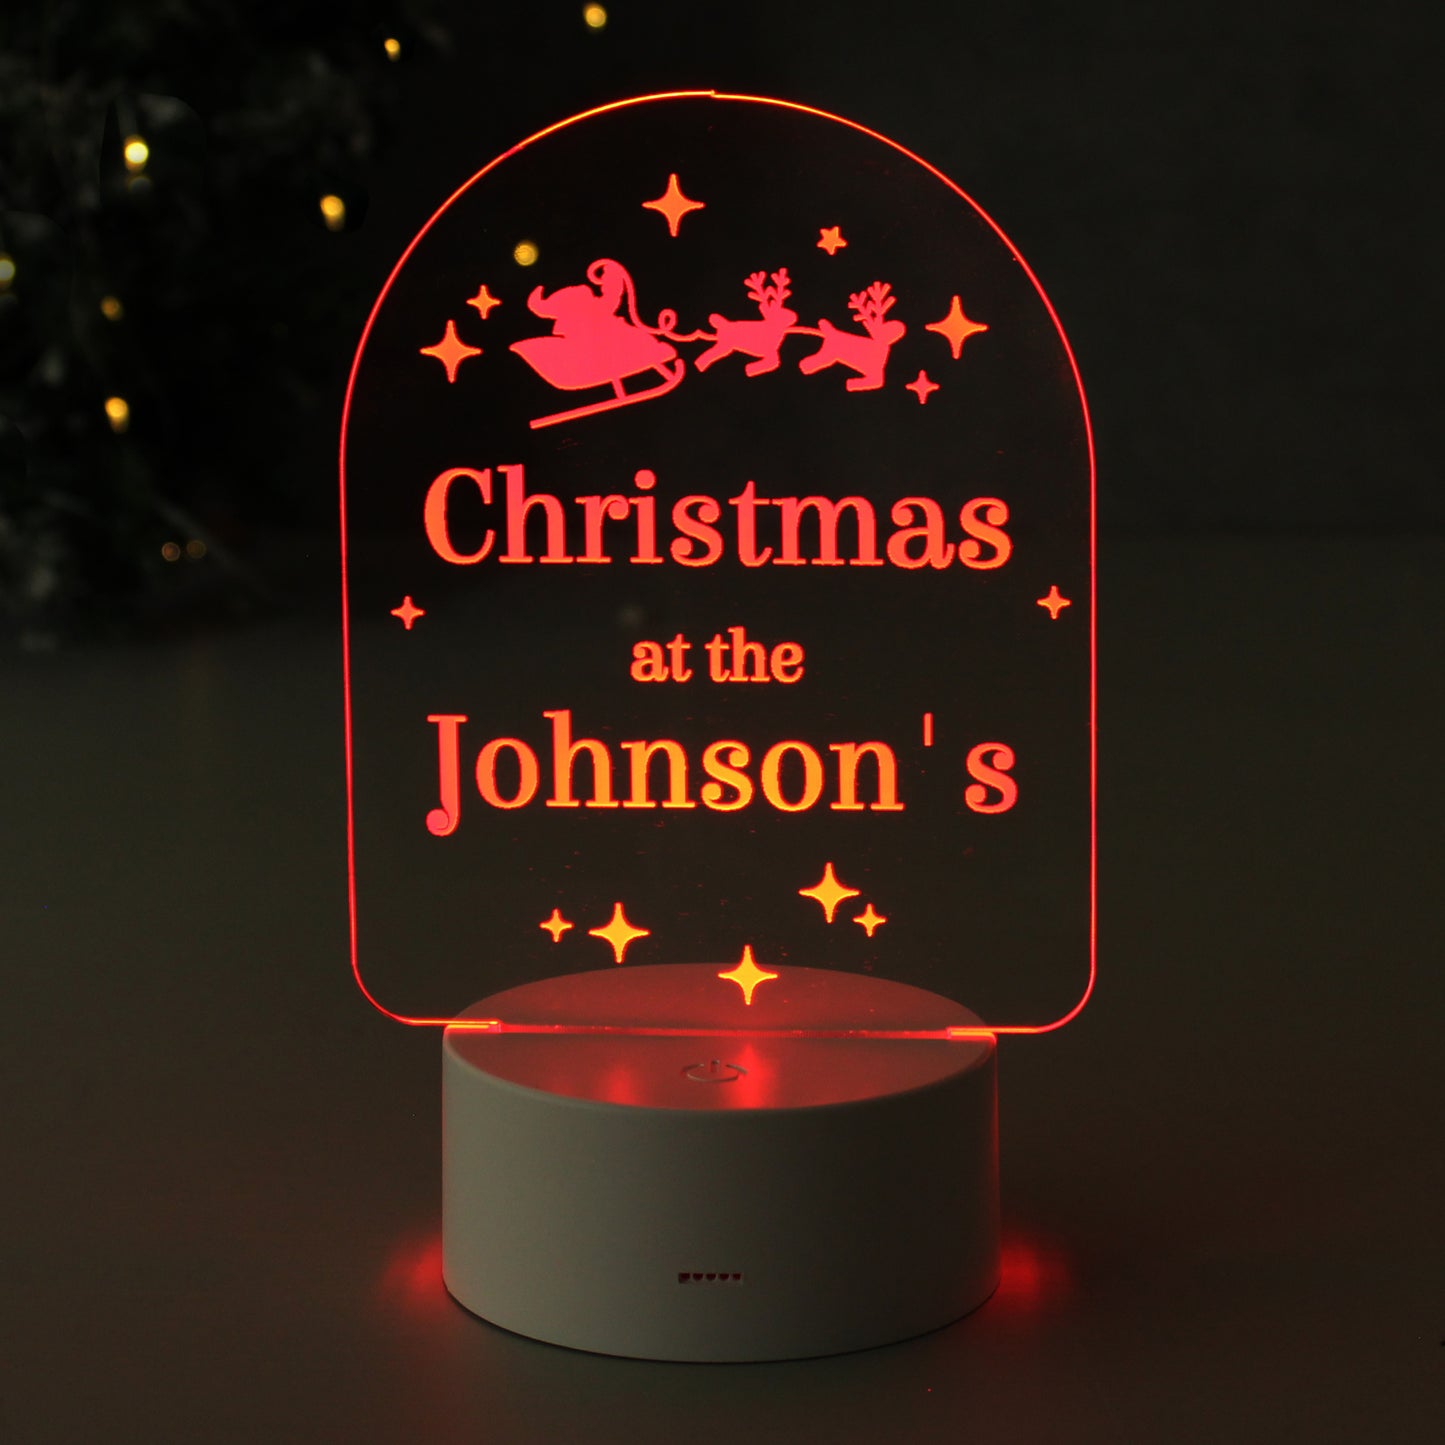 Personalised Christmas LED Light